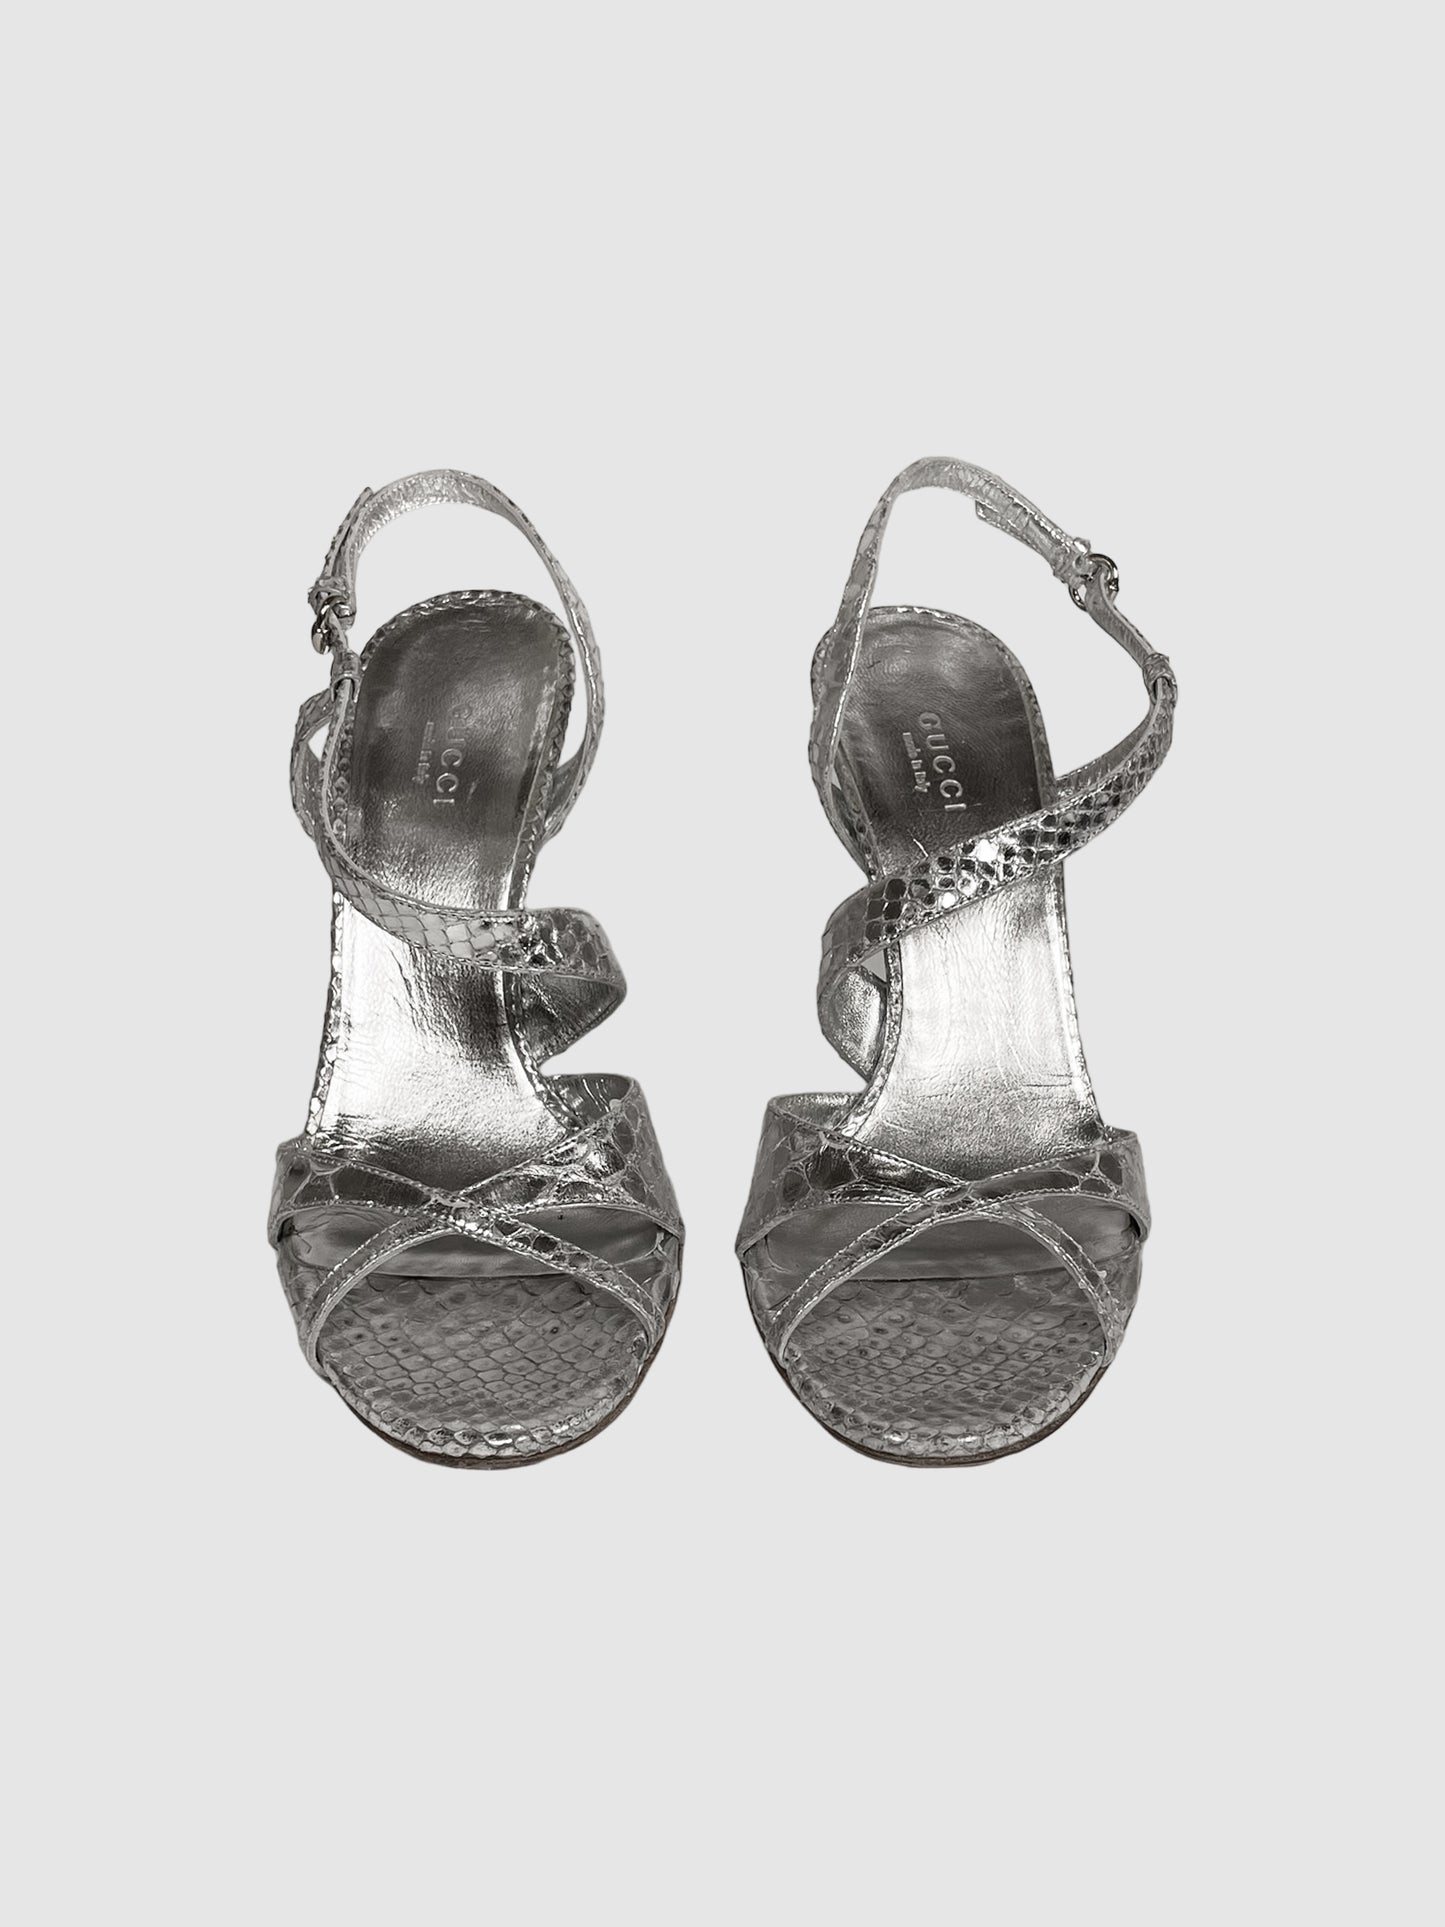 Gucci Reptile Embossed Strappy Stiletto Heels - Size 6.5